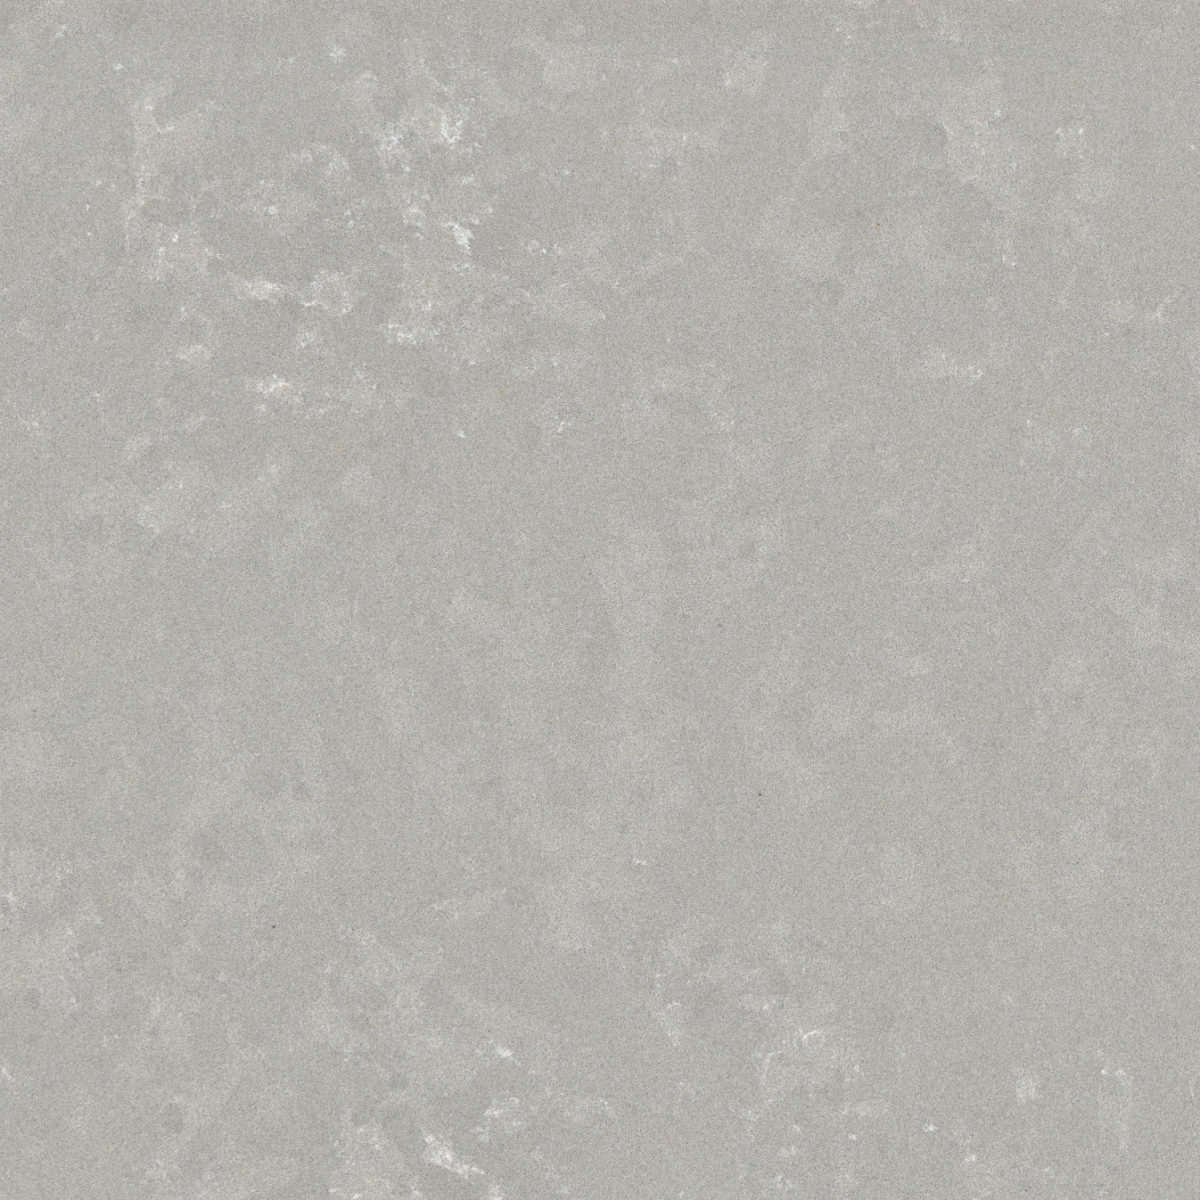 Poblenou Silestone Quartz Close Up Detail